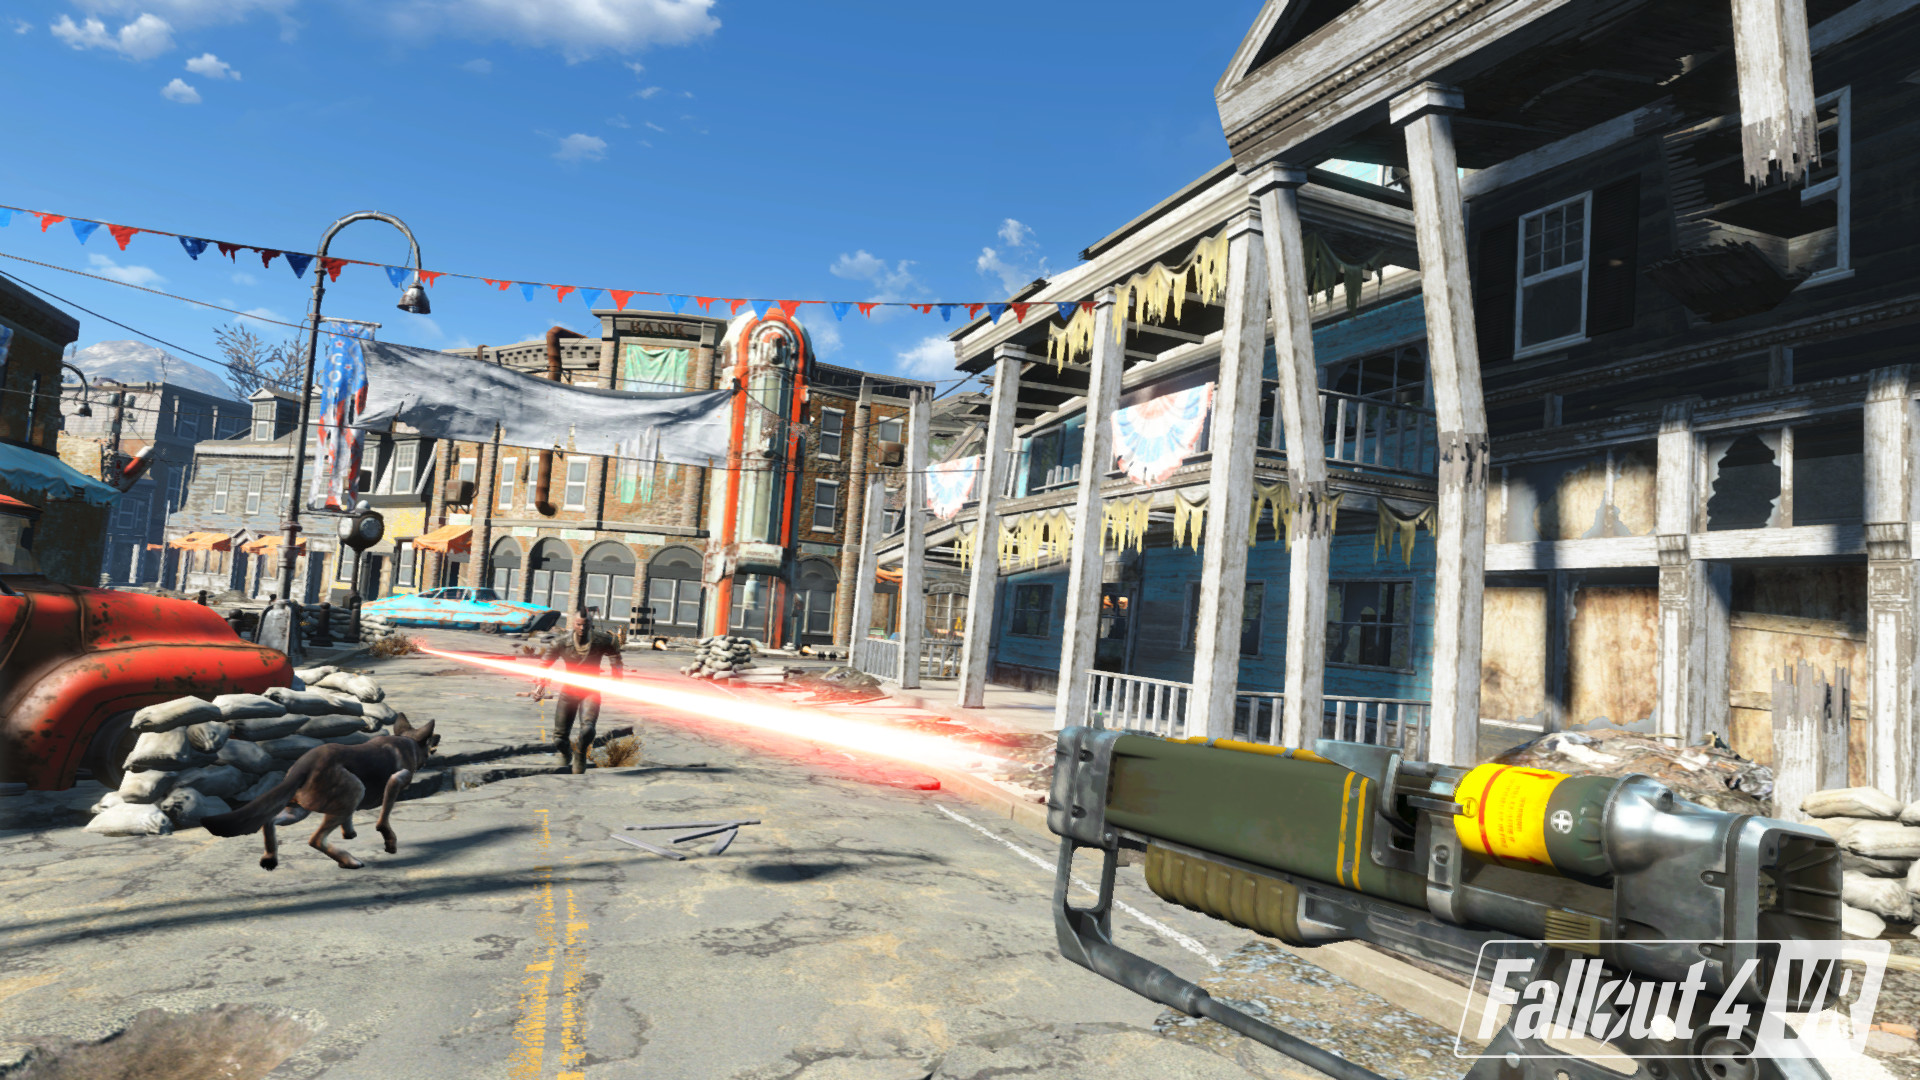 Fallout 4 VR screenshot